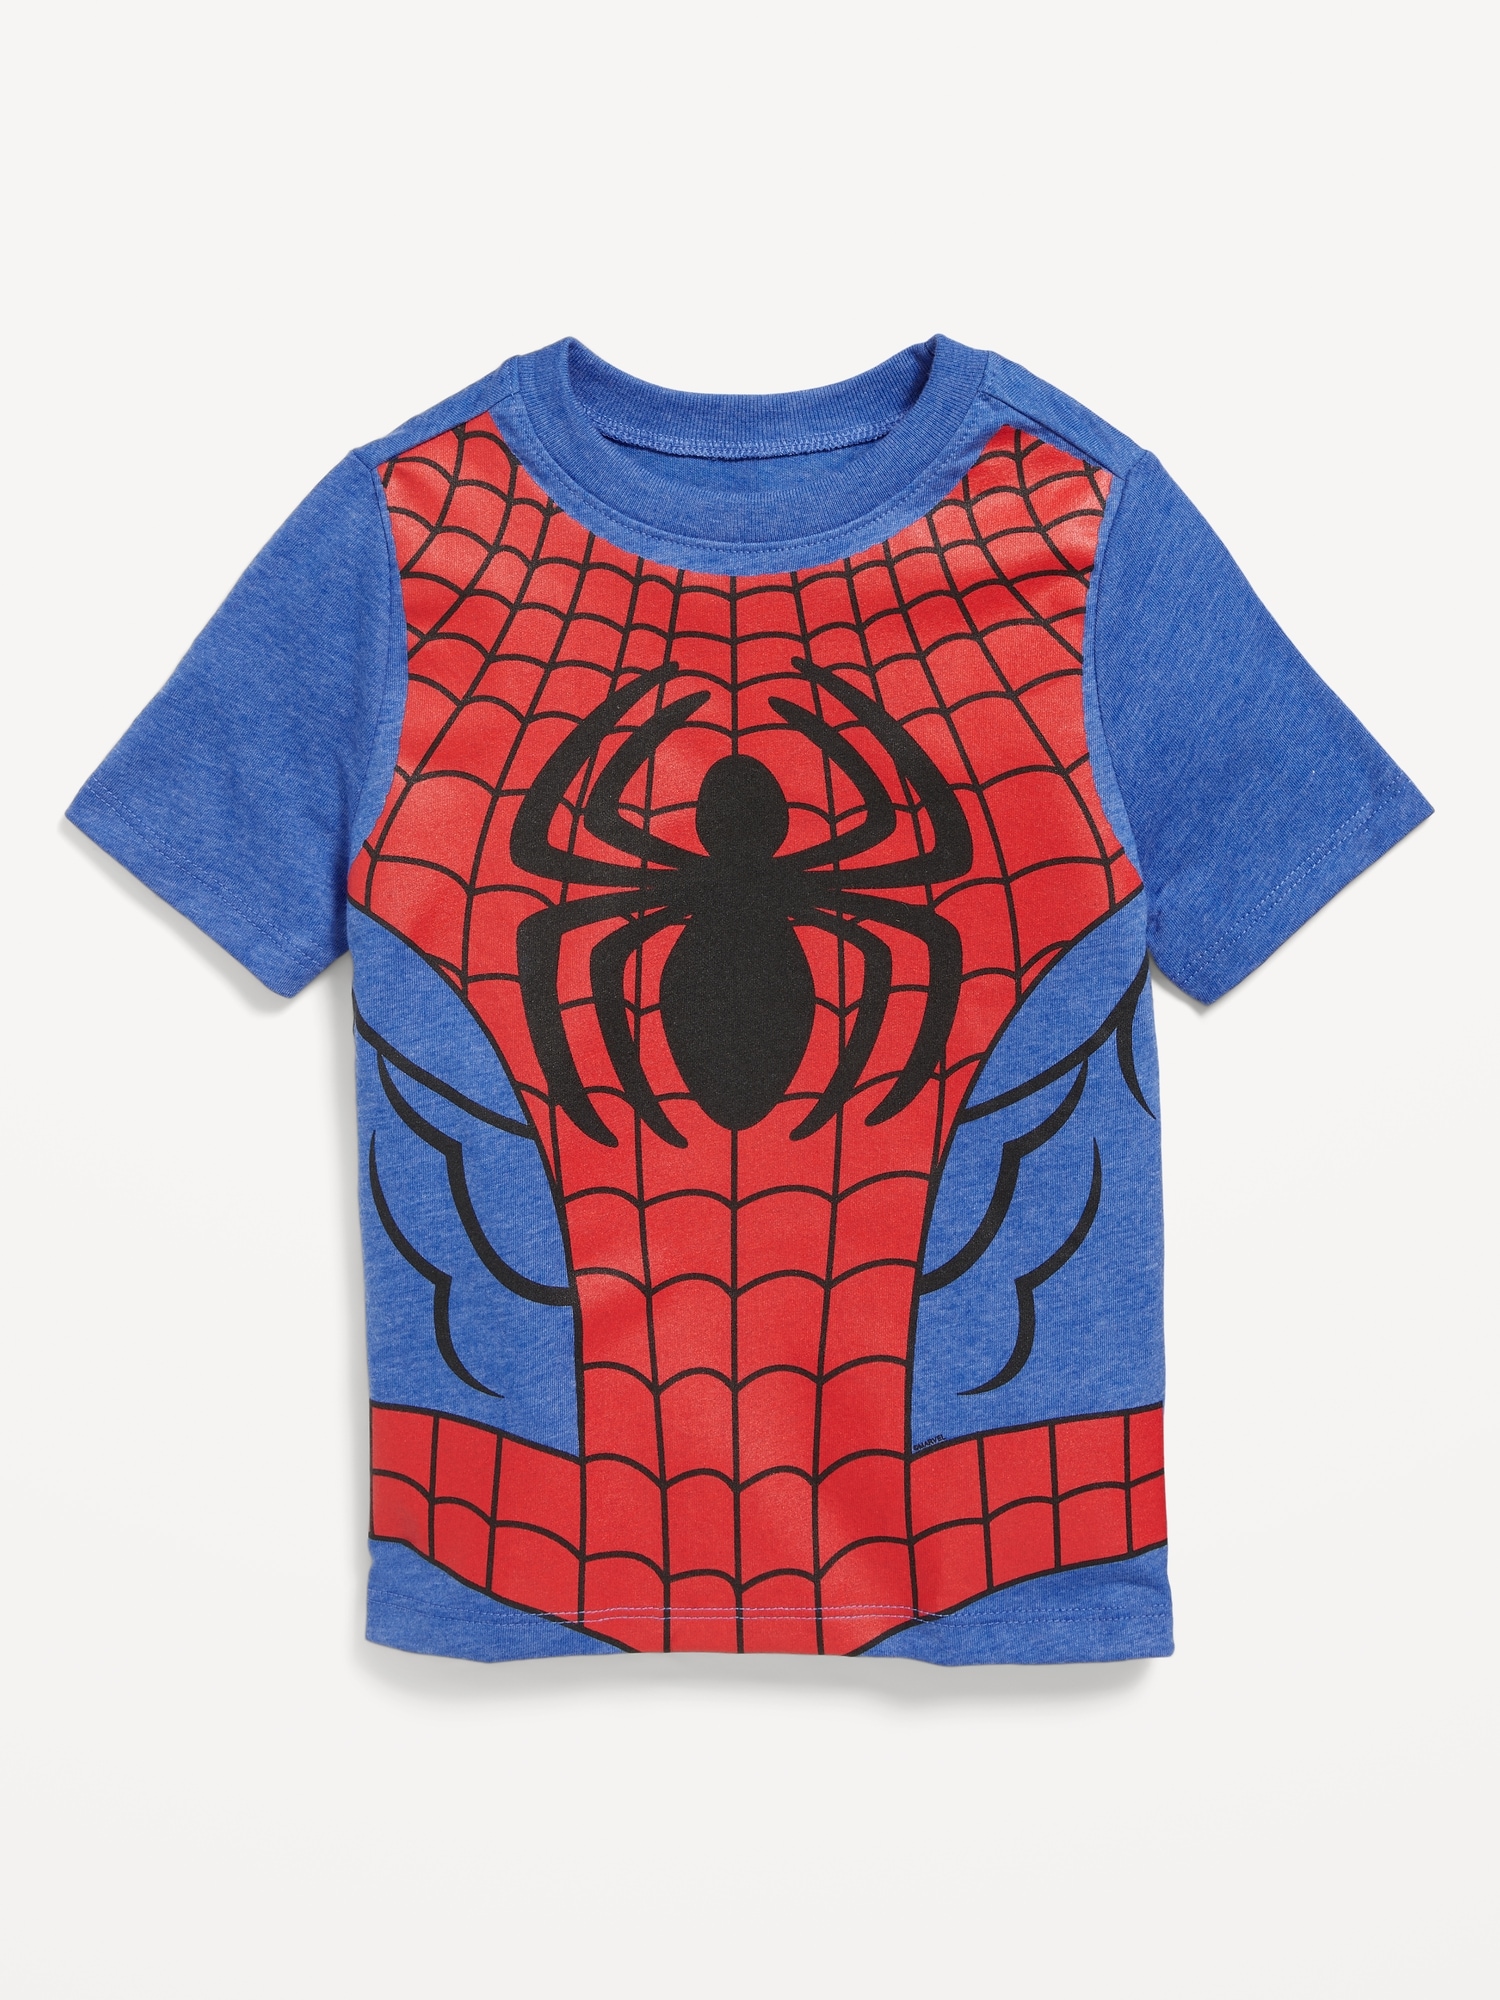 Spiderman Pajama Shirt 4T